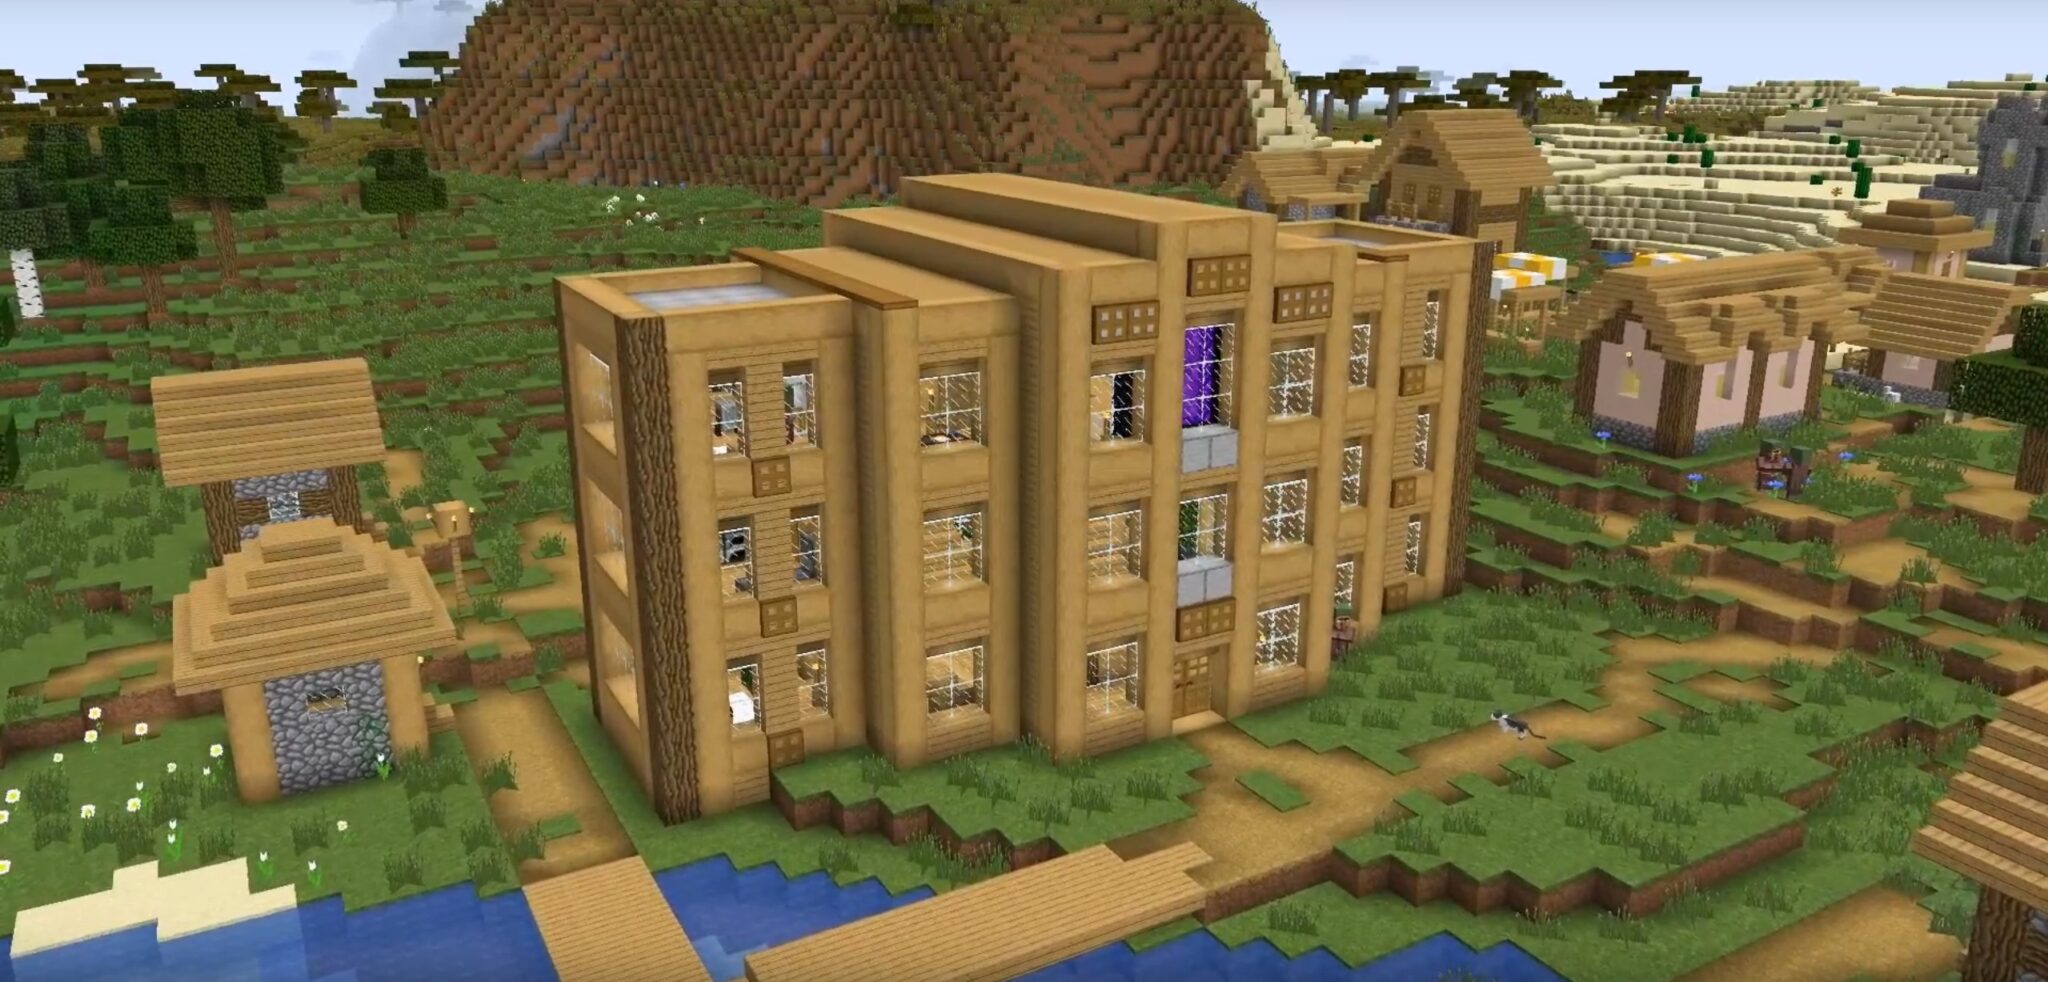 Minecraft Villager Hotel Survival Base Ideas and Design.